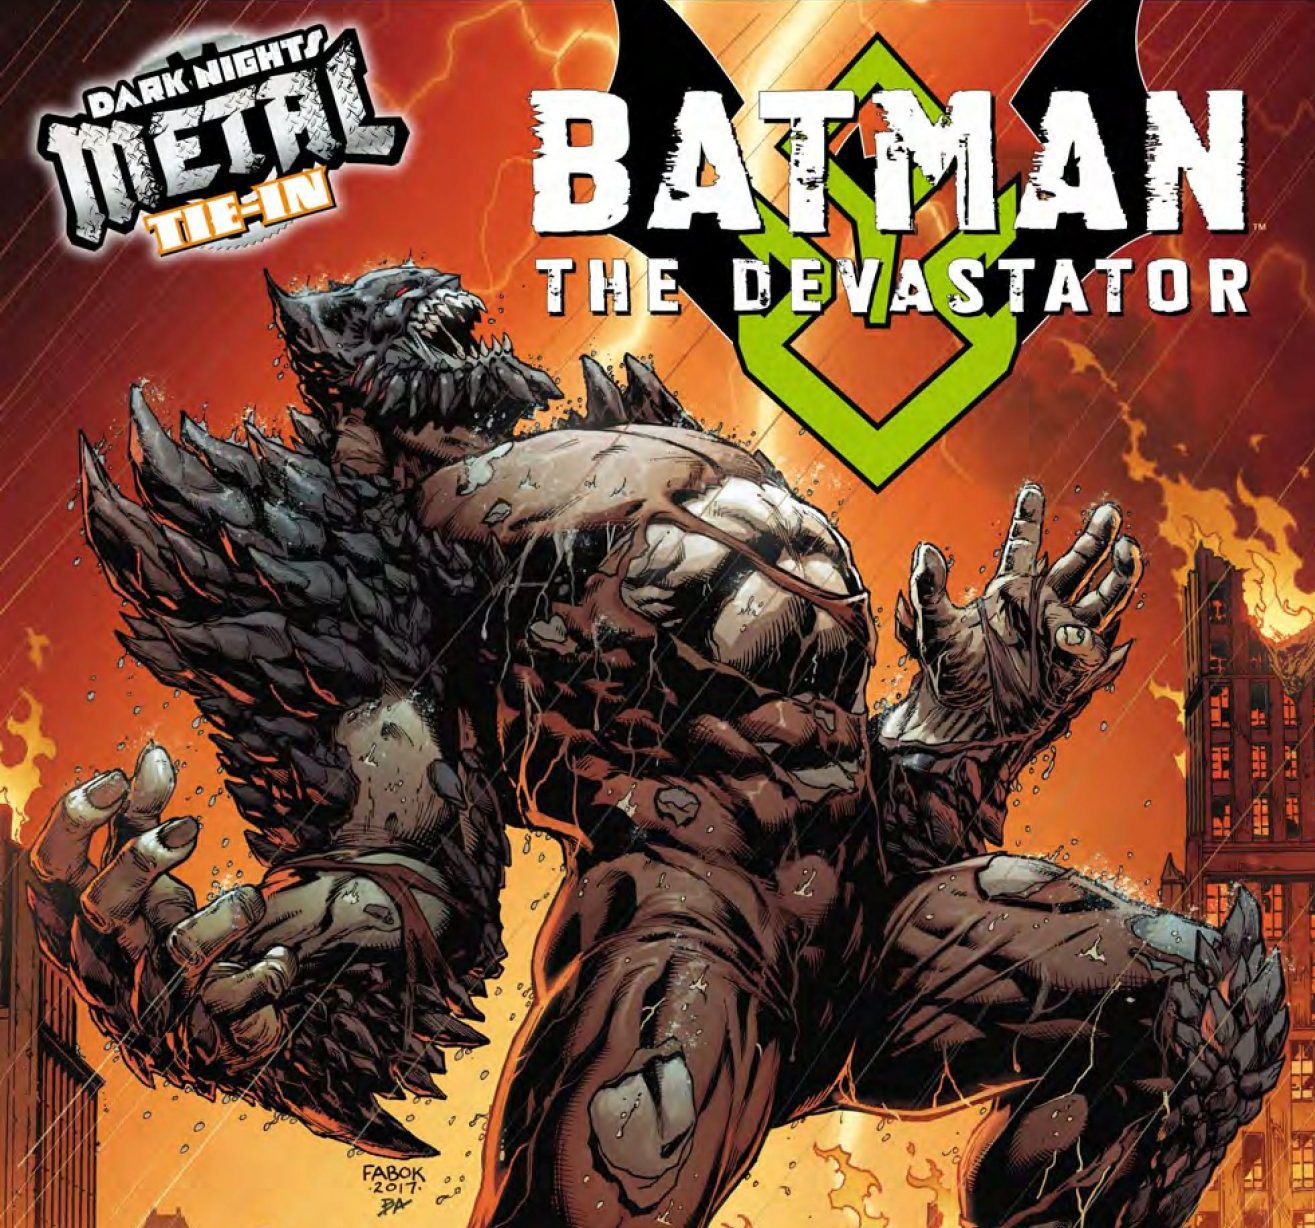 Batman: The Devastator #1 Review